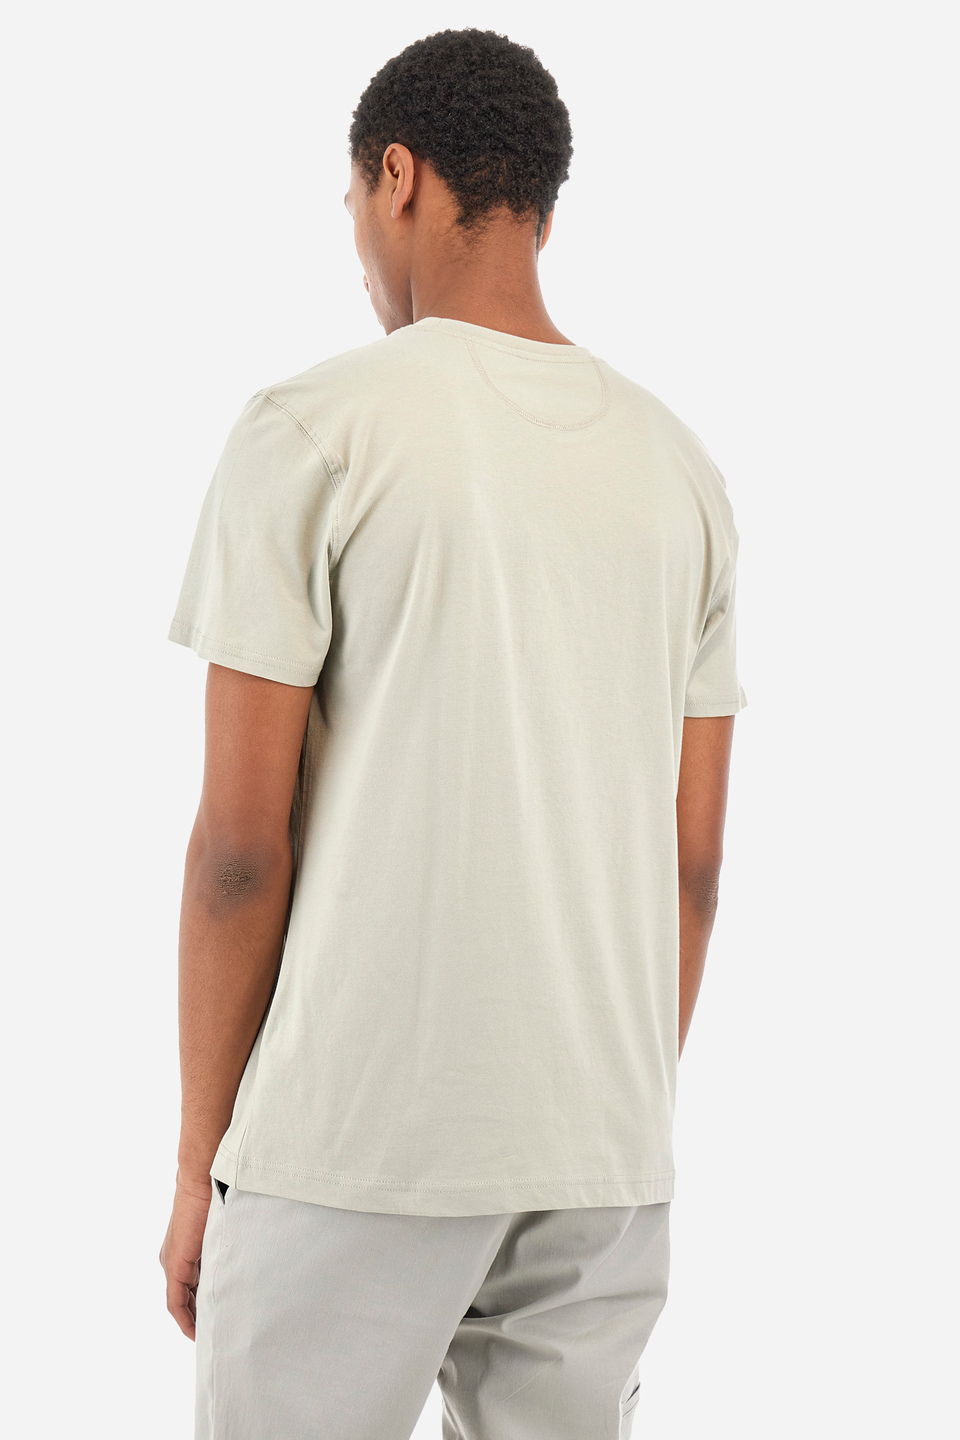 Men's regular fit T-shirt - Yann | La Martina - Official Online Shop